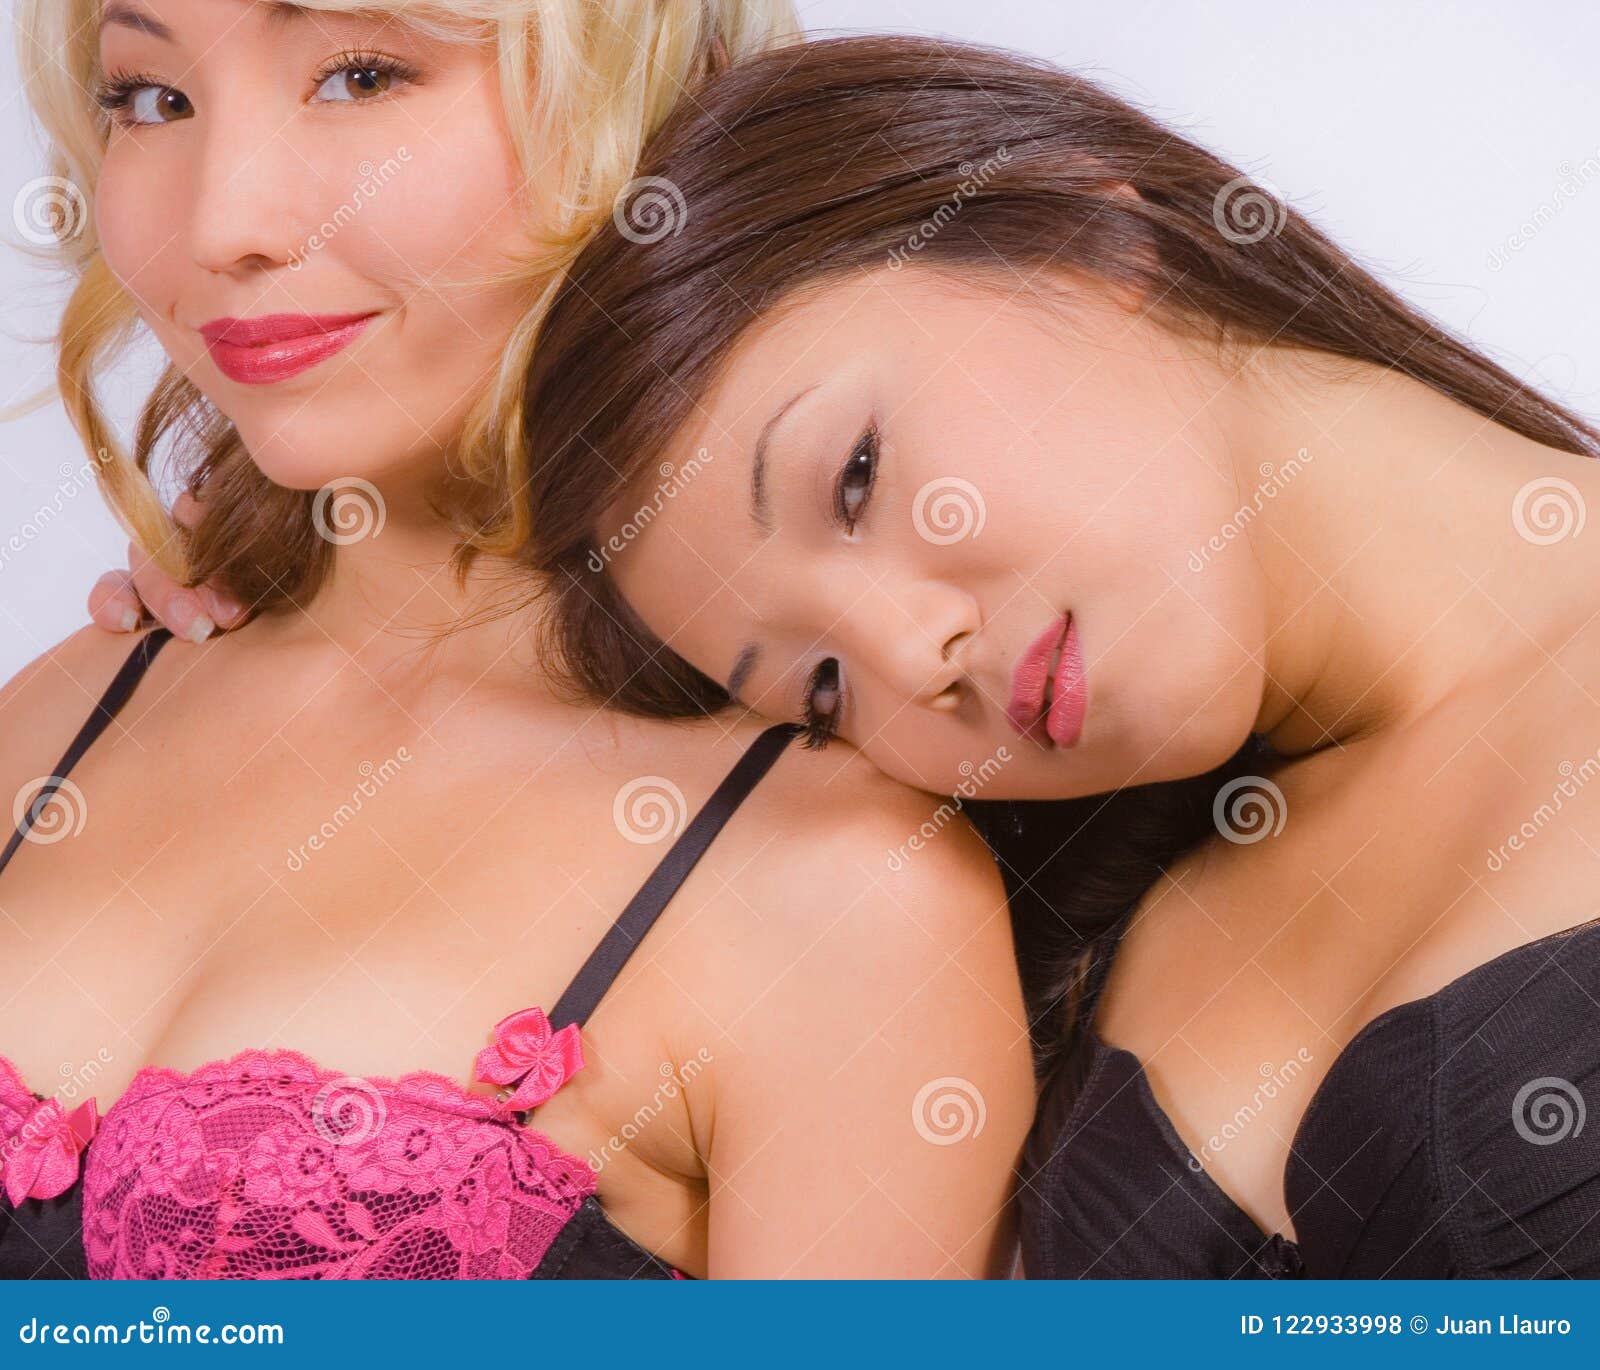 Asians And Blondes Lesbians Pics